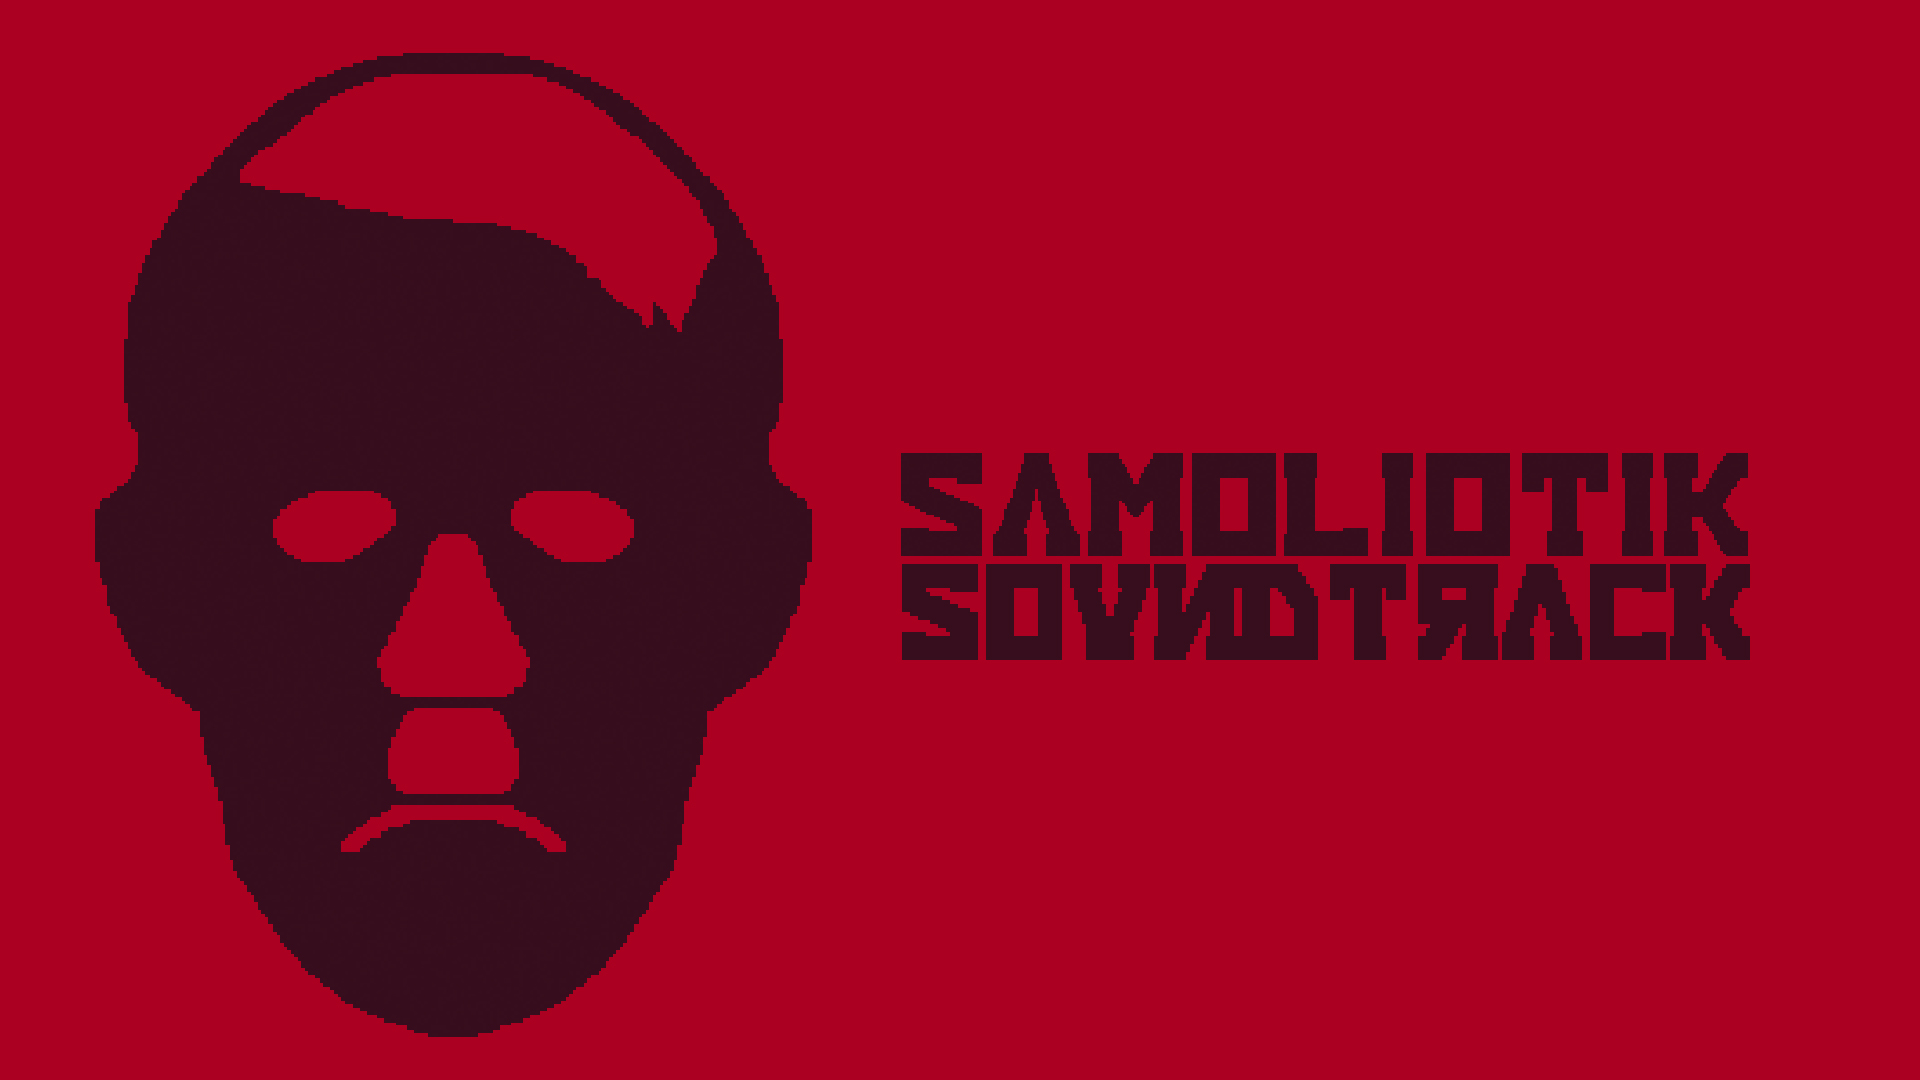 SAMOLIOTIK - SOUNDTRACK Featured Screenshot #1